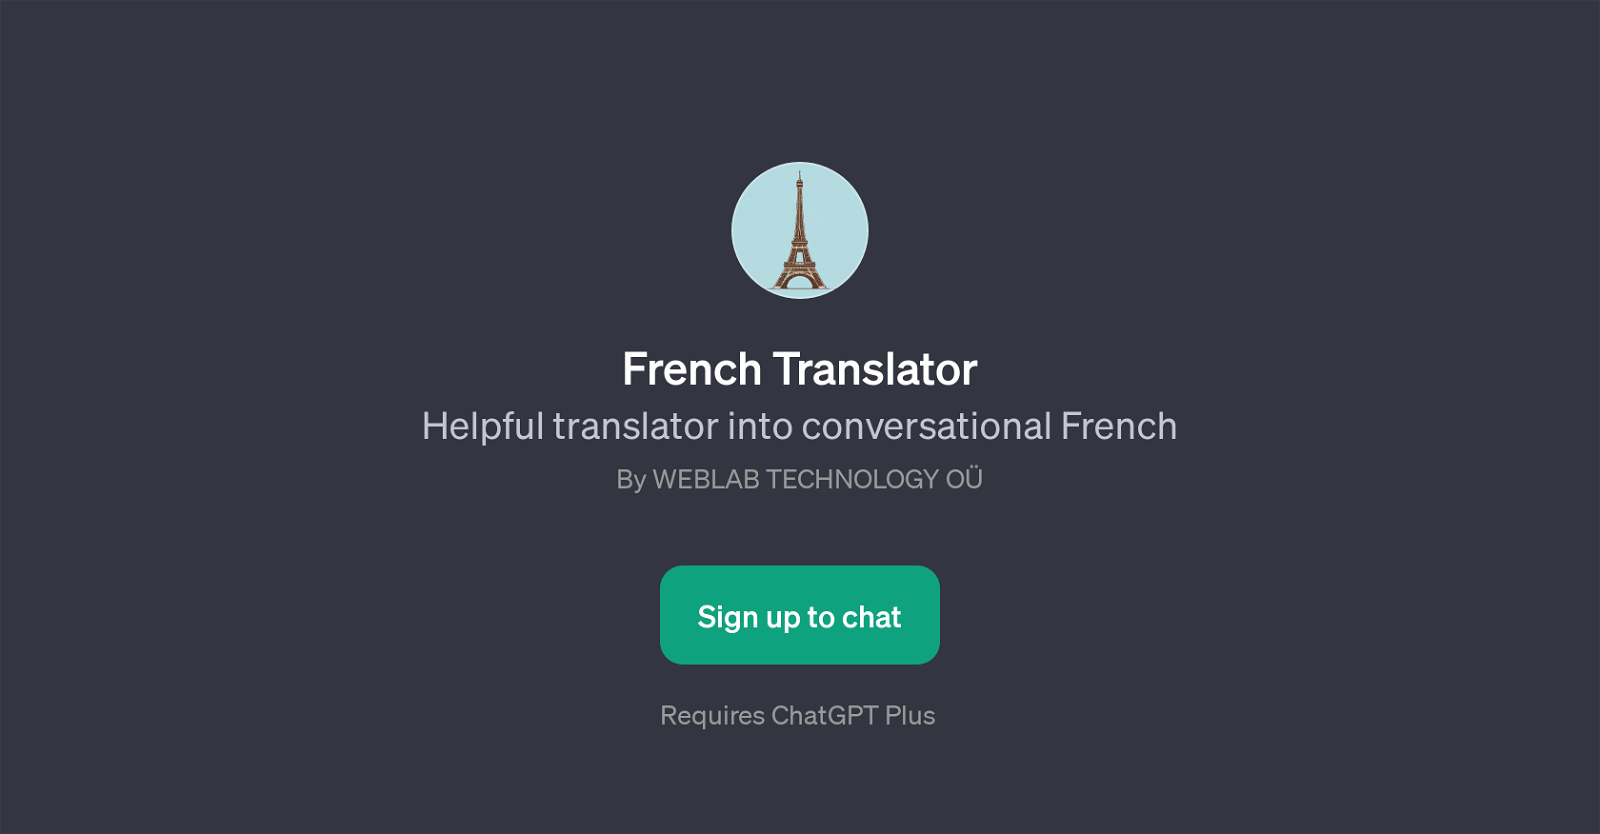 French Translator website